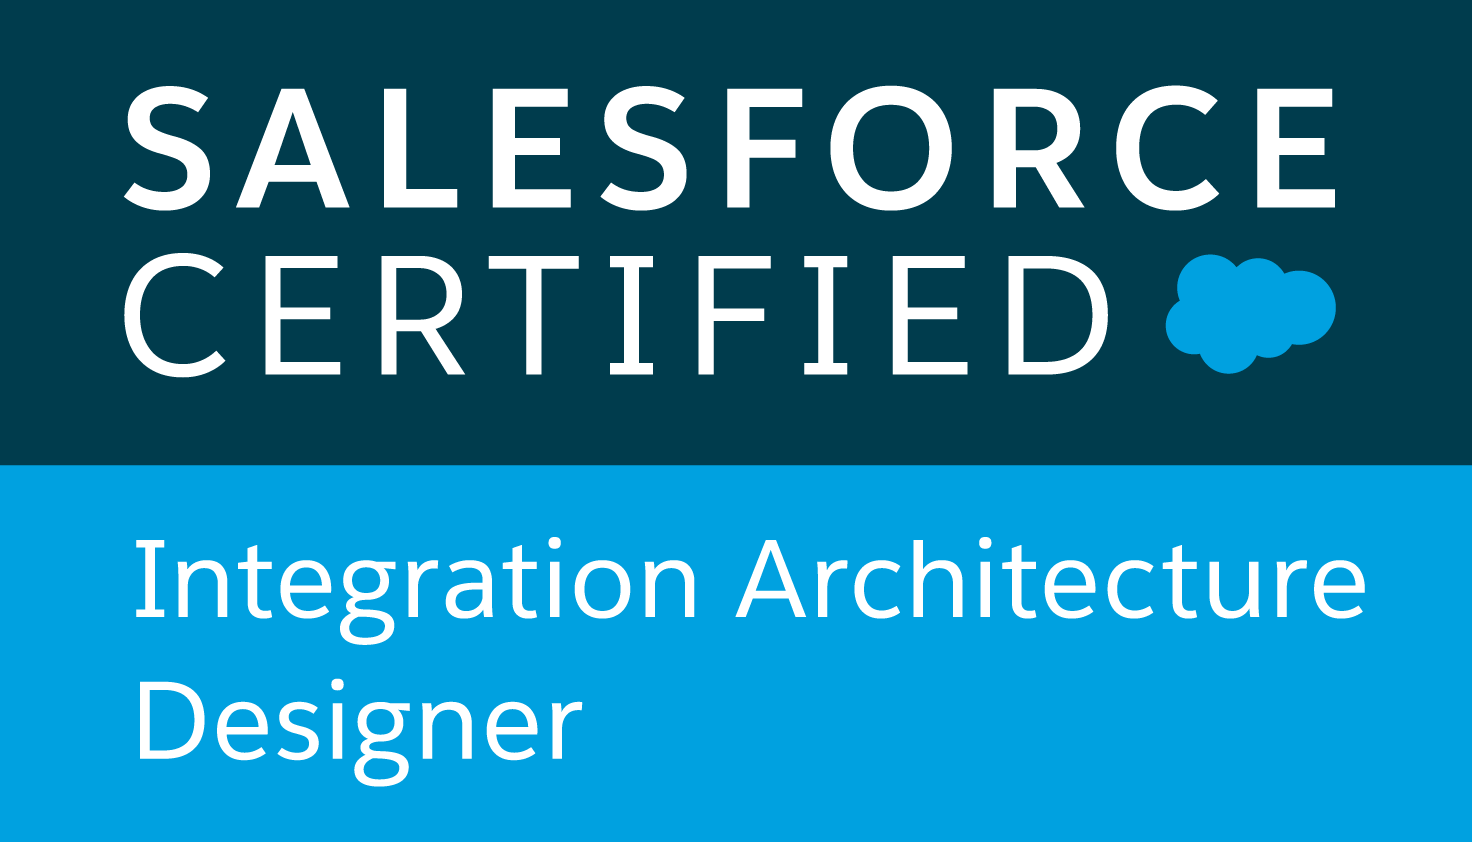 Certified Salesforce Integration Architecture Designer